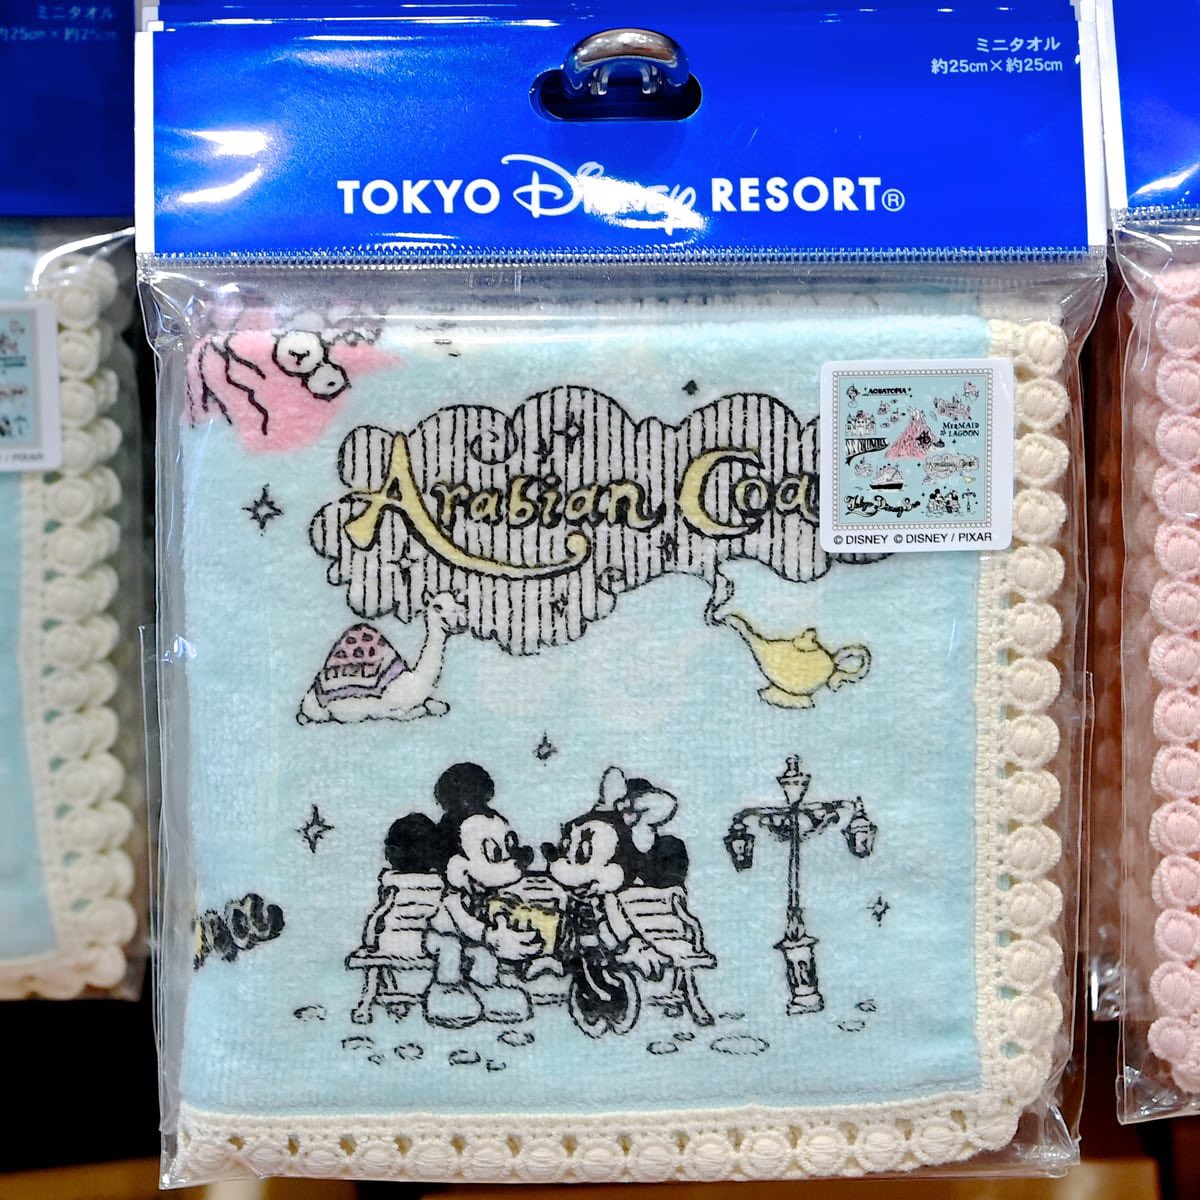 Mezzomikiのディズニーブログ ミニタオルやロングフェイスタオルが登場 東京ディズニーリゾート Tokyo Disney Resort Fun Map柄グッズを紹介 詳しくは T Co E8imgmevho T Co Due0aynxzr Twitter